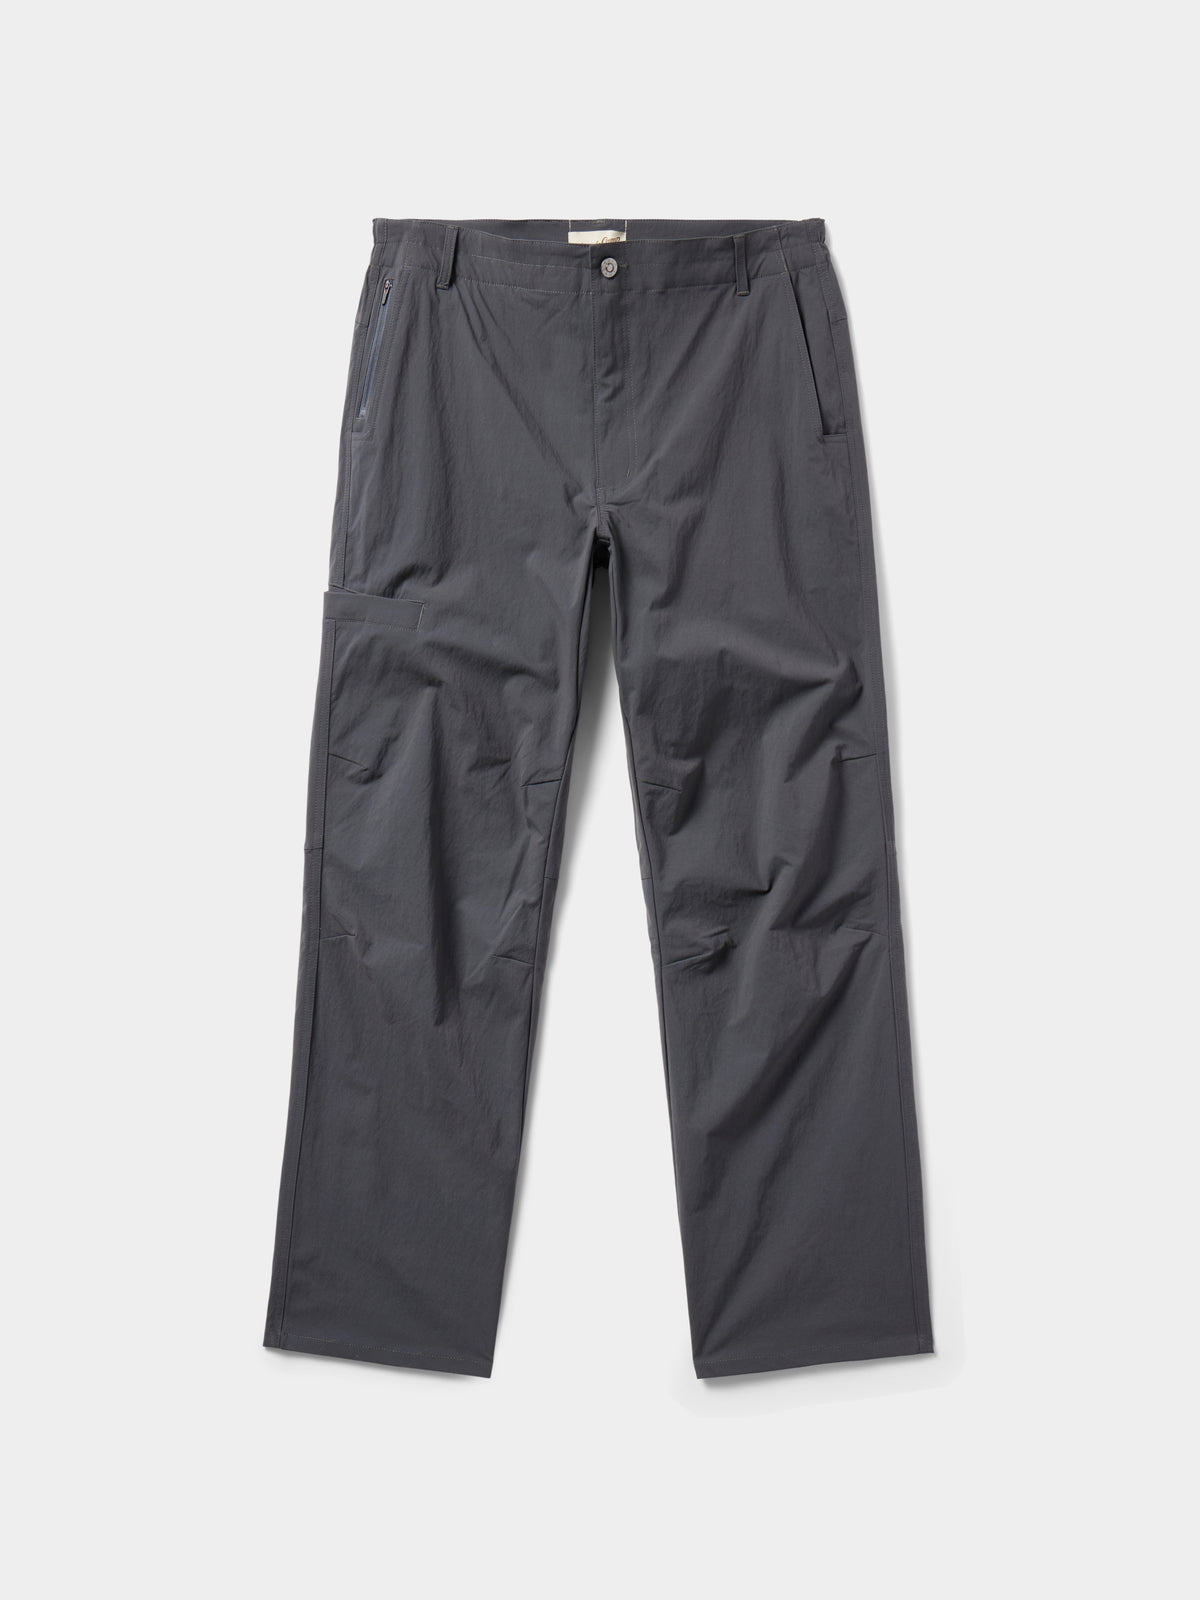 Men's Drifter Pants - Charcoal